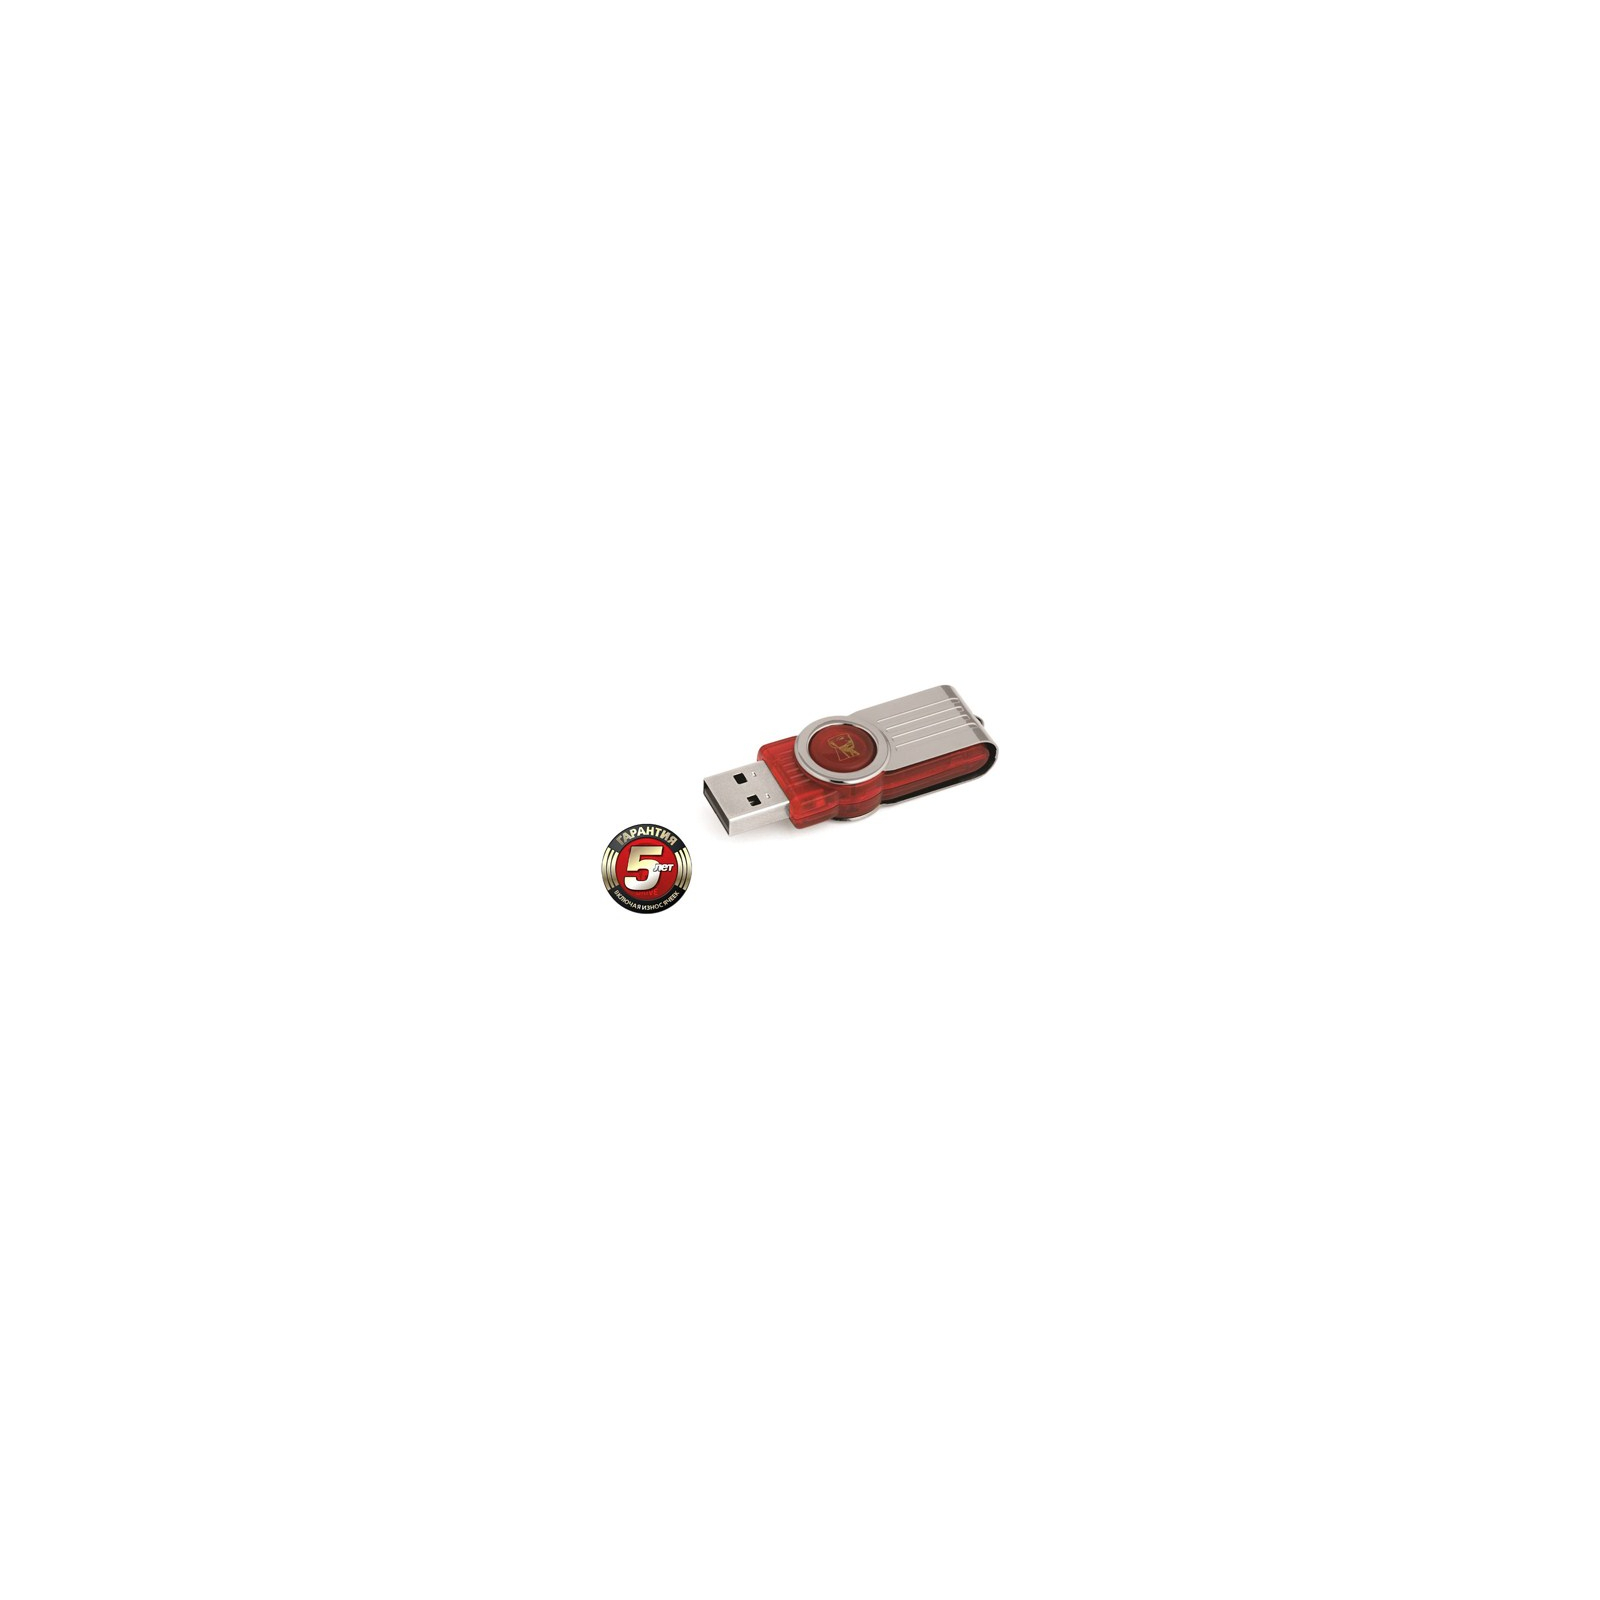 USB флеш накопитель Kingston 8Gb DataTraveler 101 G2 (DT101G2/8GB) изображение 3